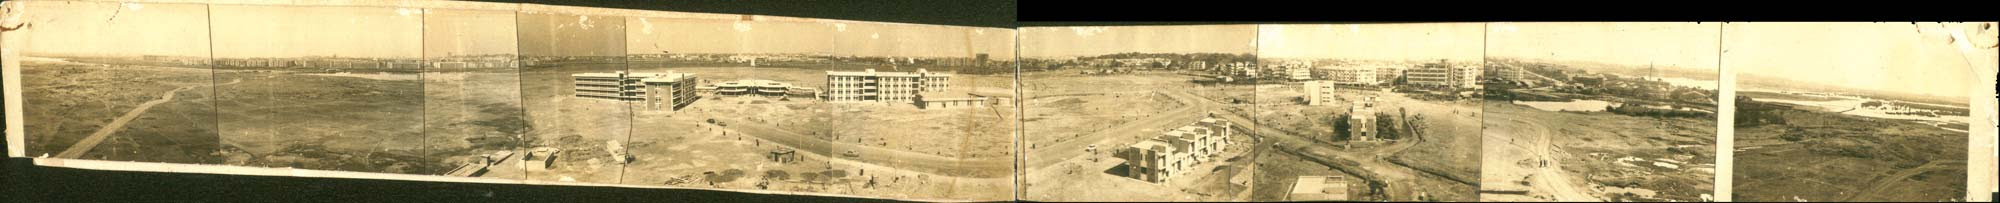 Vidyanagari Campus - mid 70's